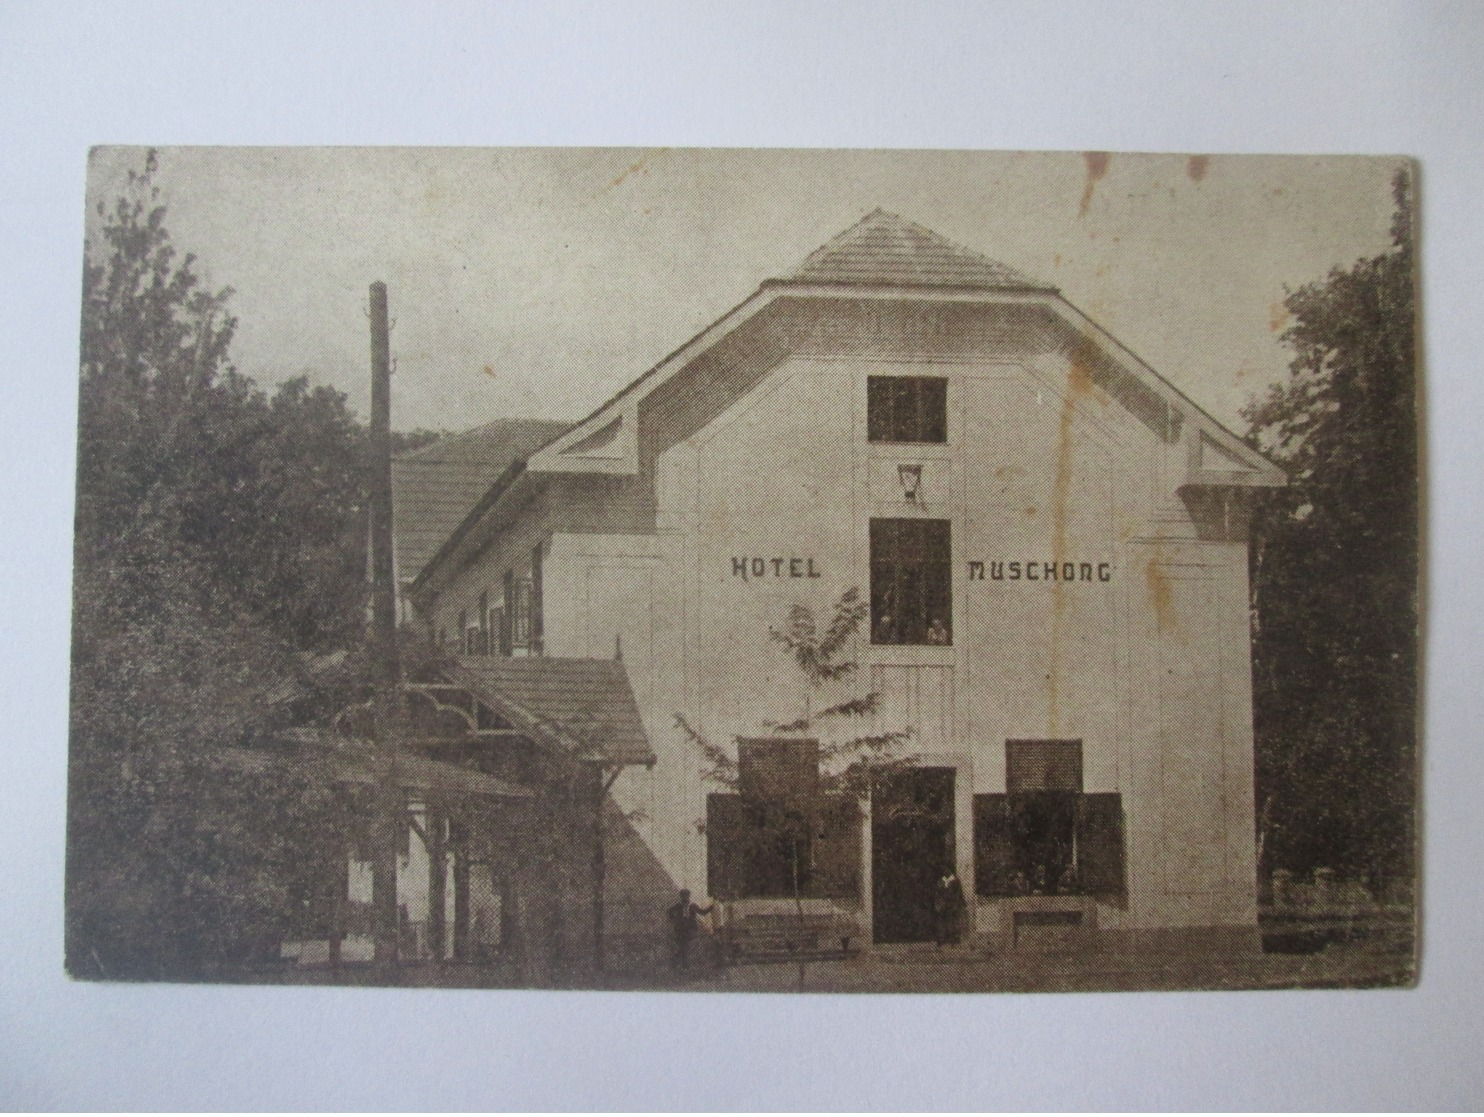 Romania/Buziaș(Timiș)-Hotel Muschong,unused Post Card From The 20s - Roumanie